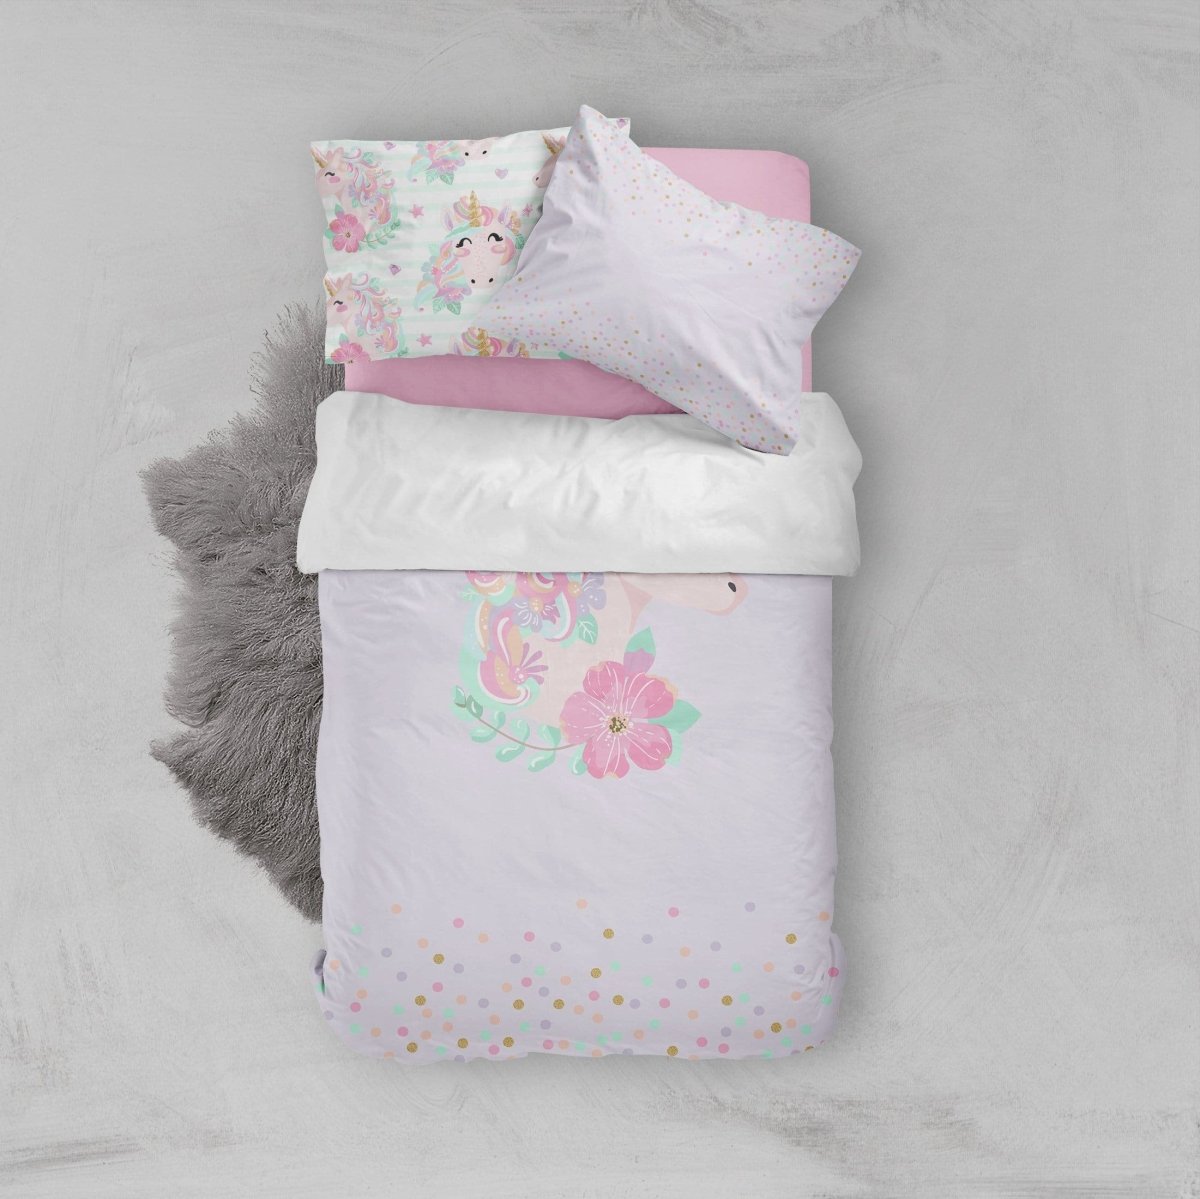 Personalized Purple Unicorn Kids Bedding Set (Comforter or Duvet Cover) - text, Unicorn Dreams,